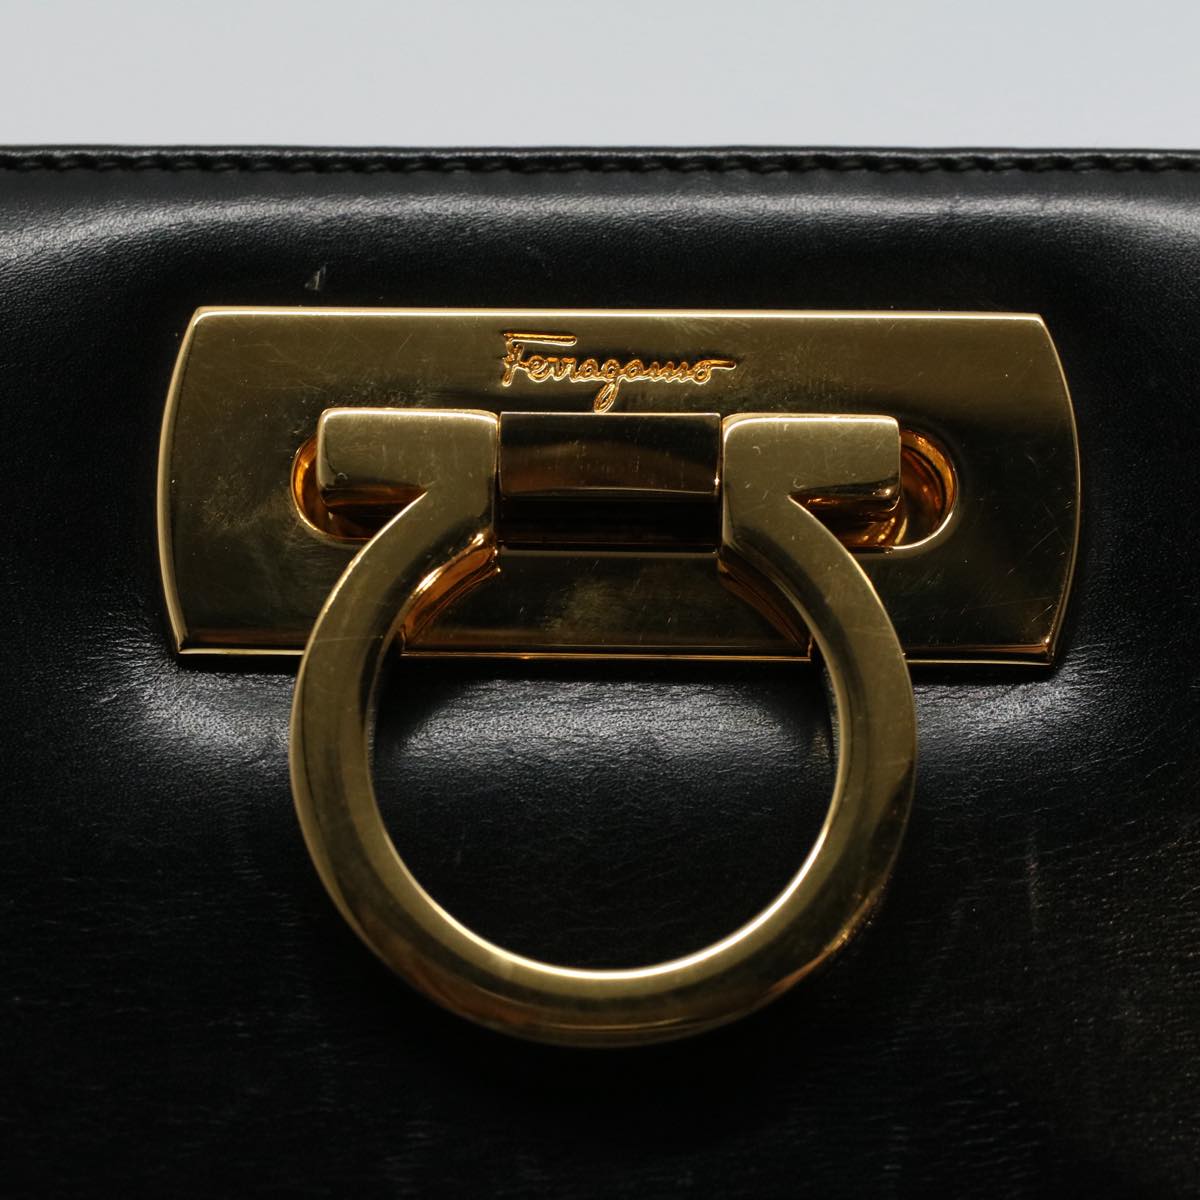 Salvatore Ferragamo Chain Gancini Shoulder Bag Leather Black Auth ar10875